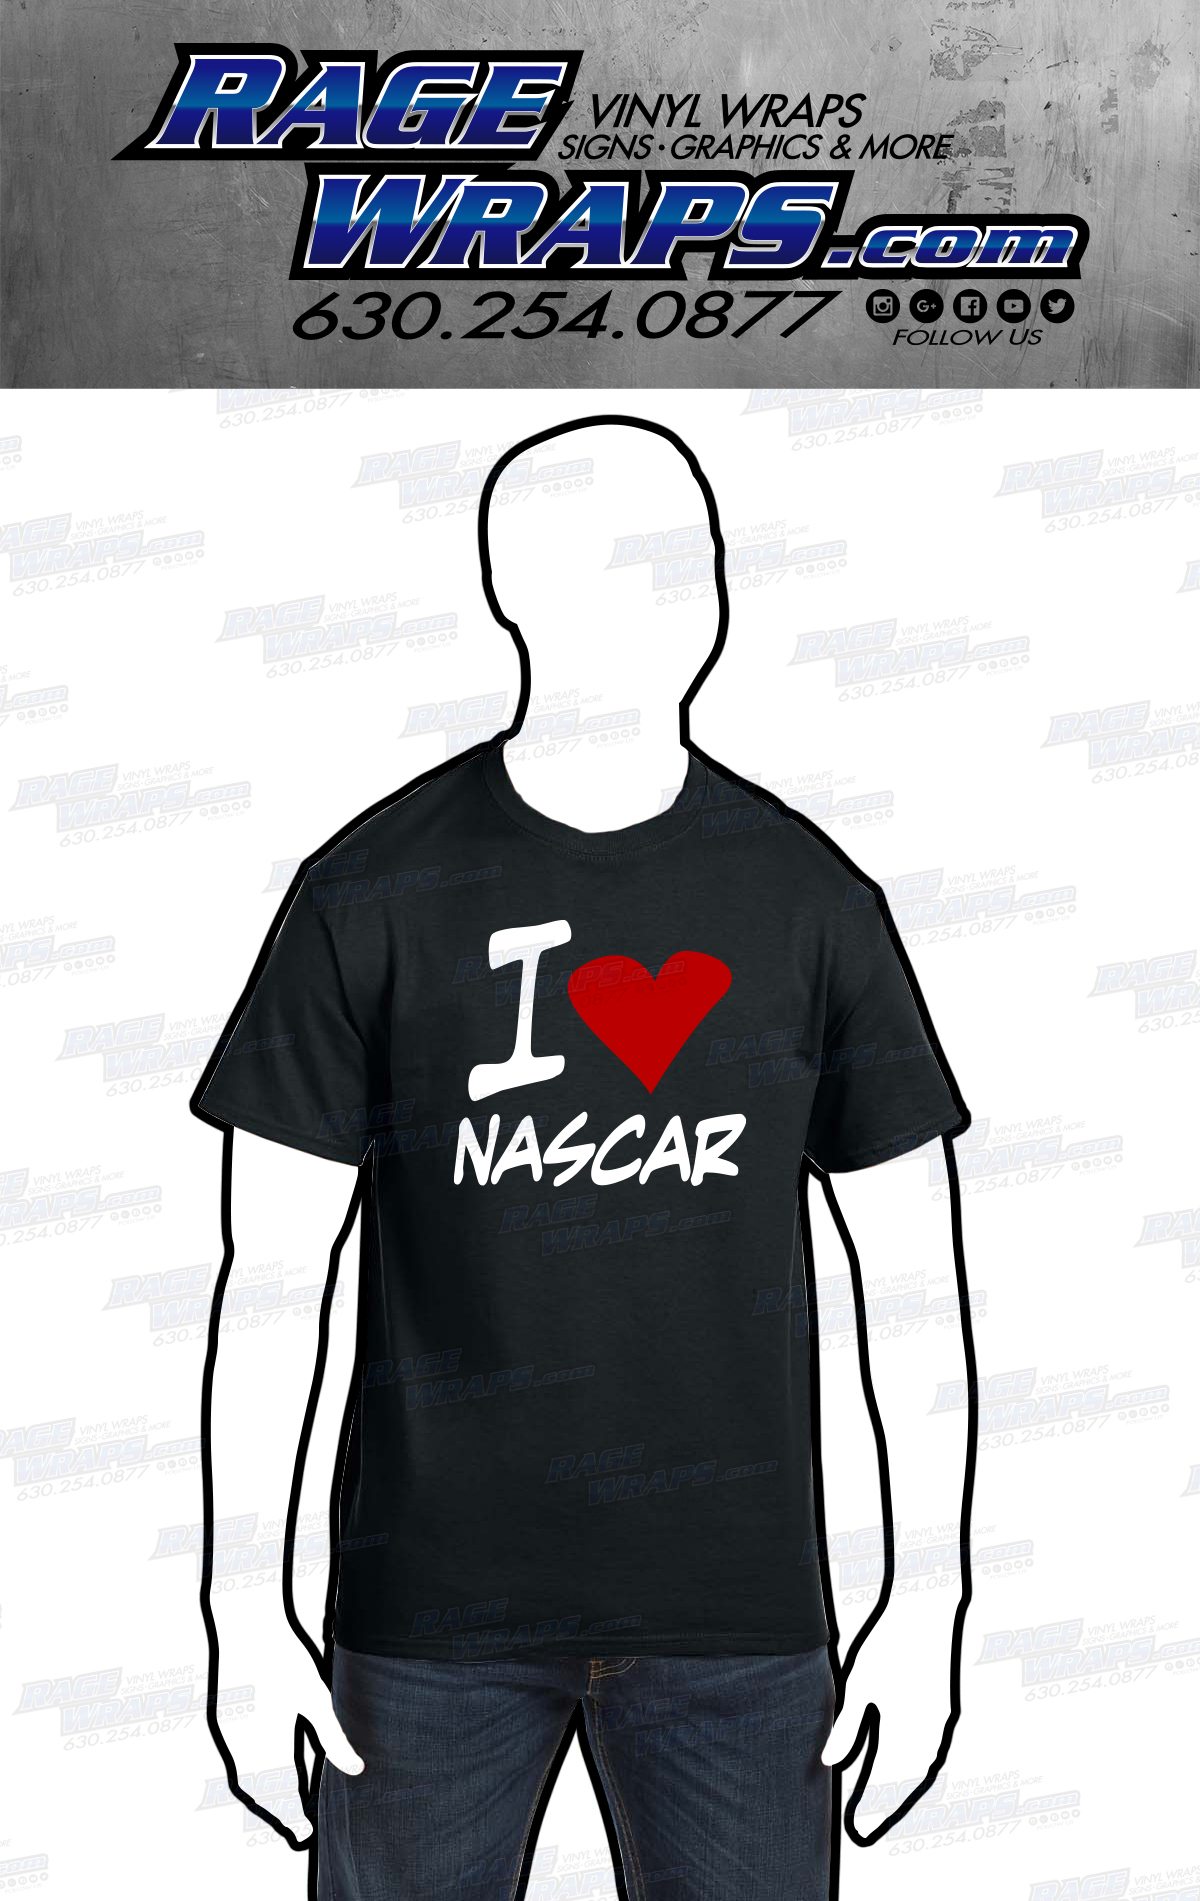 Details about   FIRESTONE Tires Logo T-Shirt Nascar Racing Car Mechanic on Ring Spun Cotton Tee 